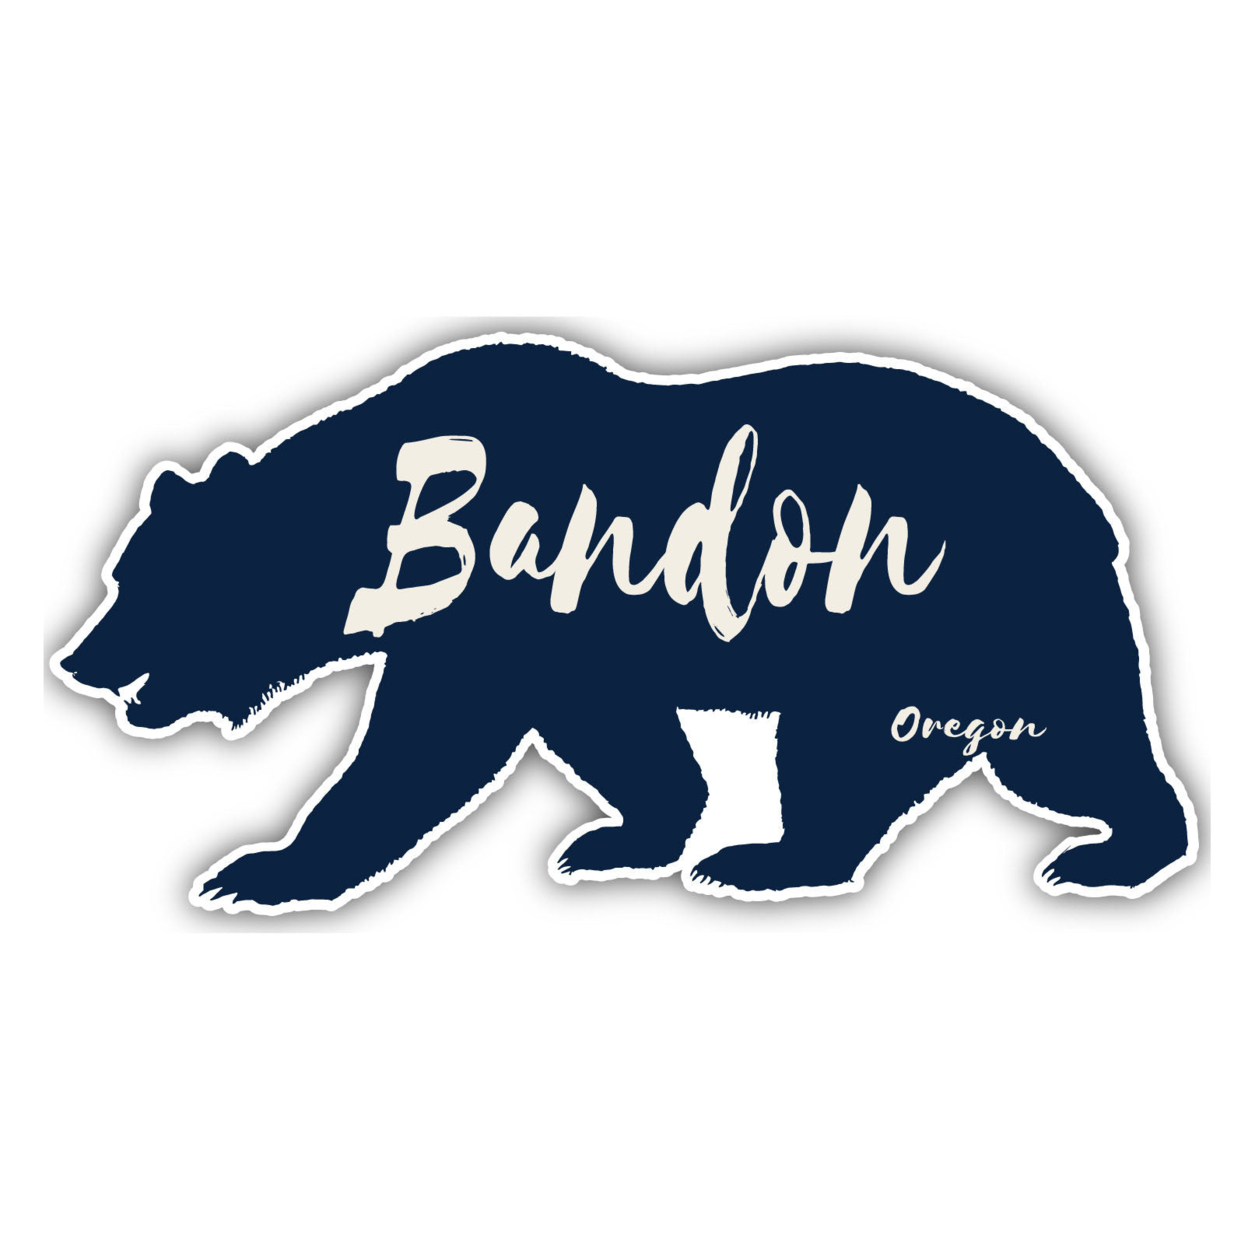 Bandon Oregon Souvenir Decorative Stickers (Choose Theme And Size) - 4-Pack, 4-Inch, Bear